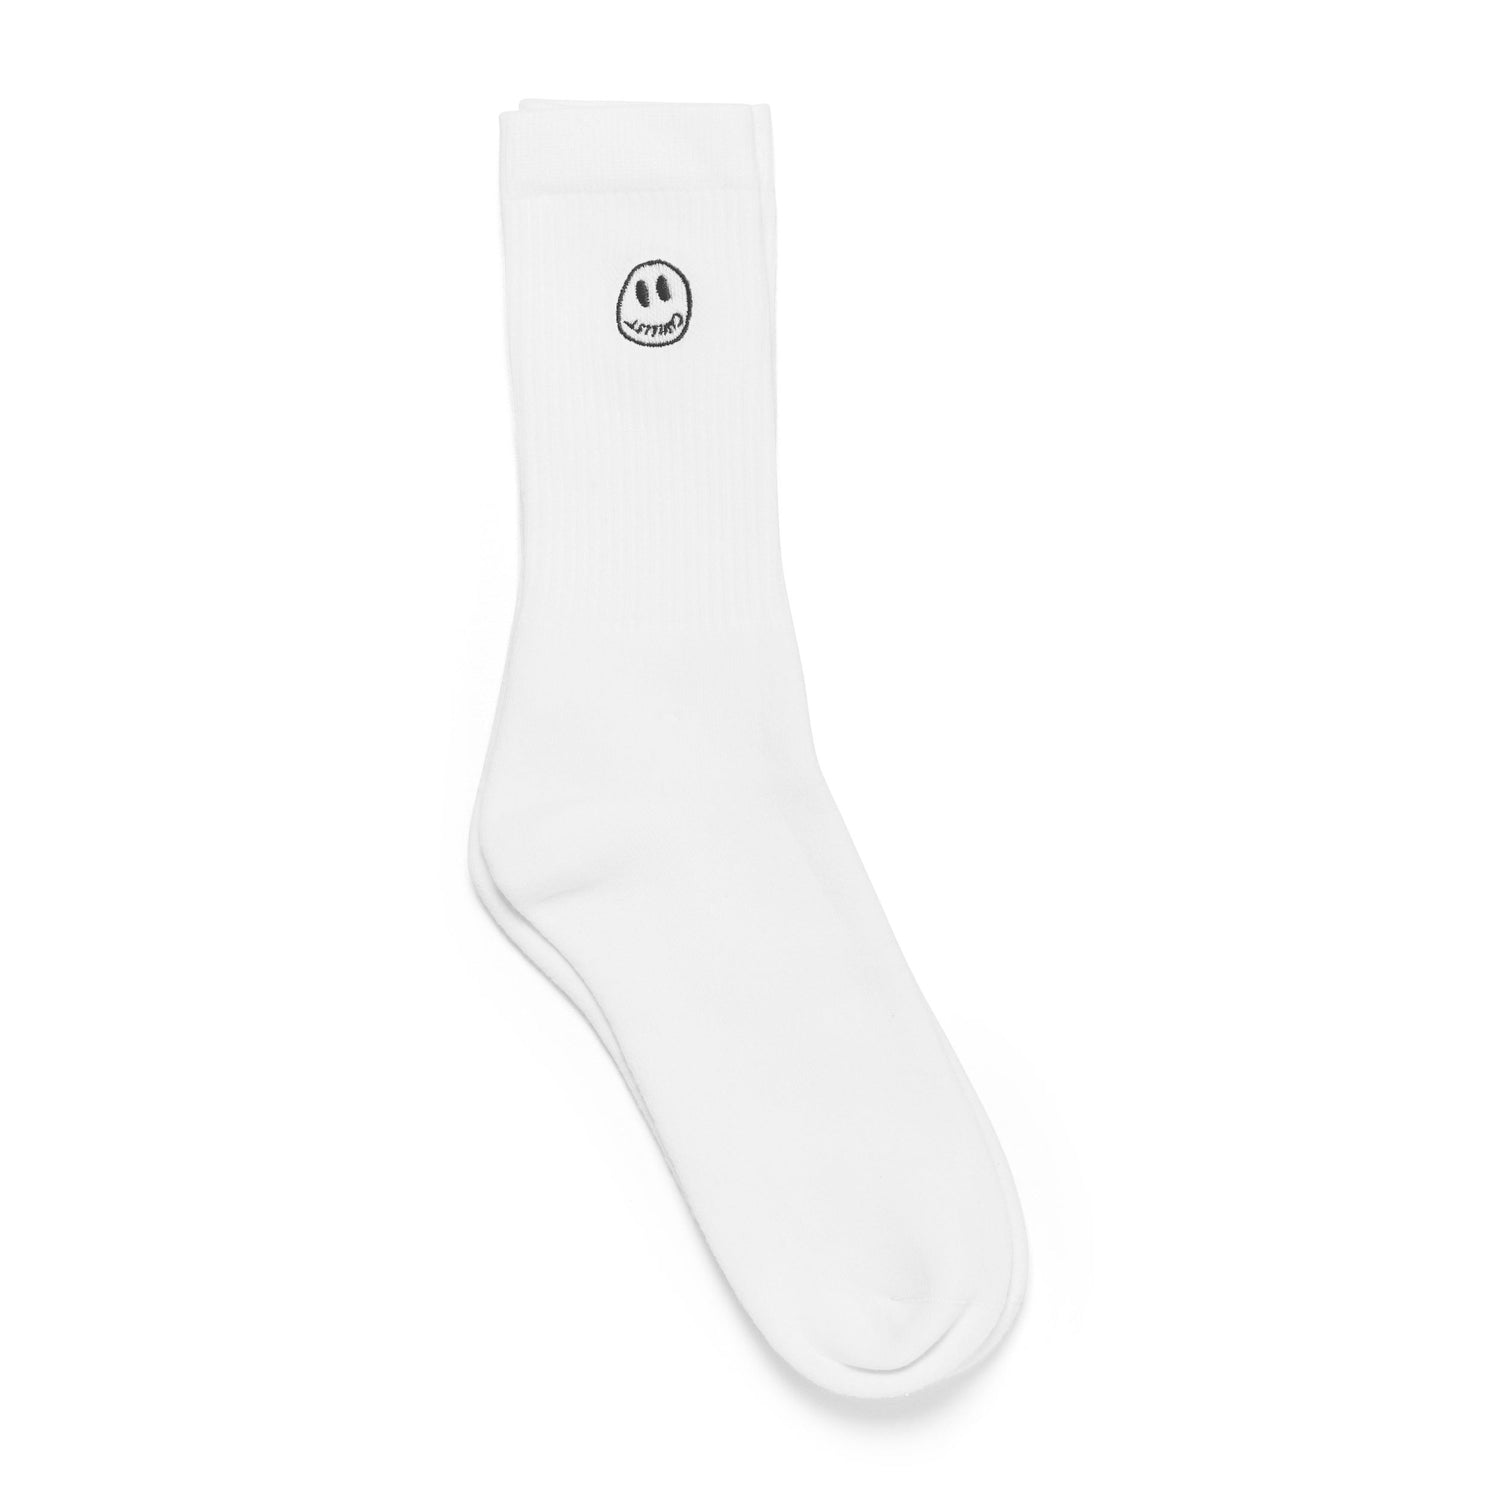 Mono Smiler Socks, White